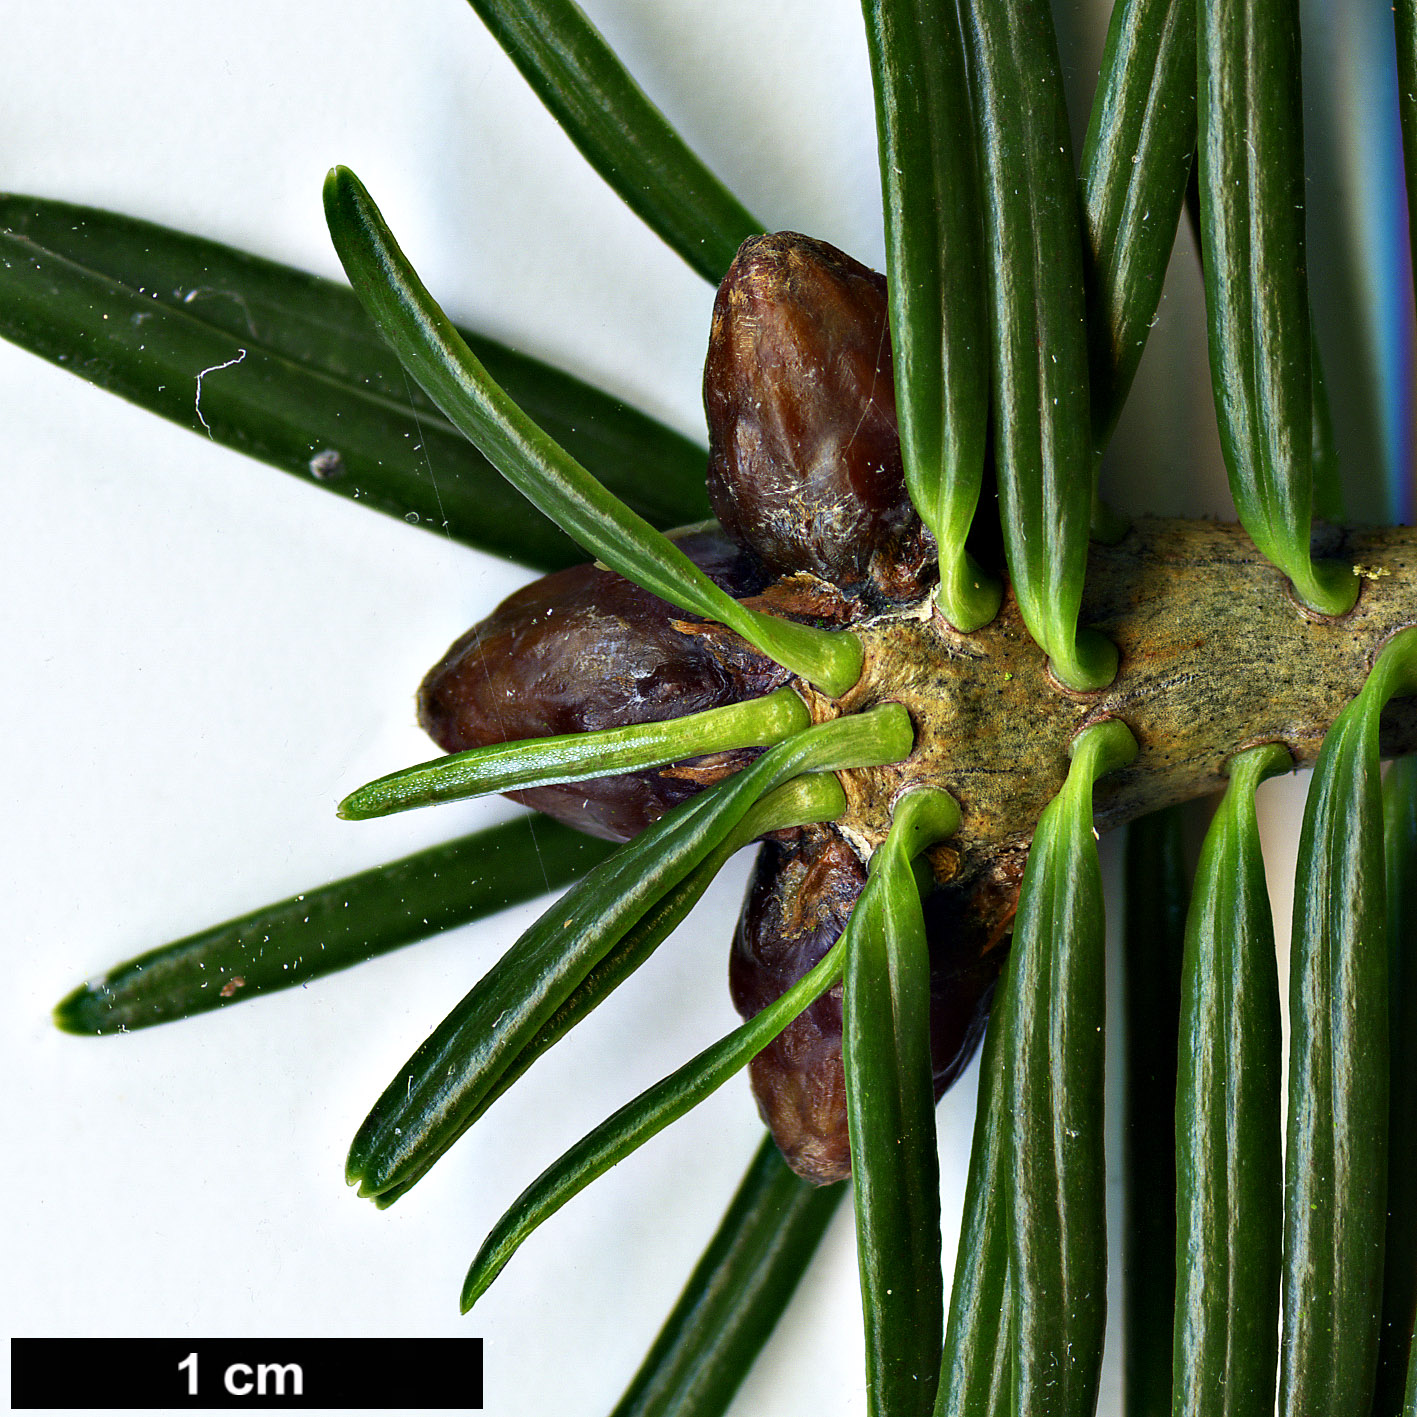 High resolution image: Family: Pinaceae - Genus: Abies - Taxon: densa